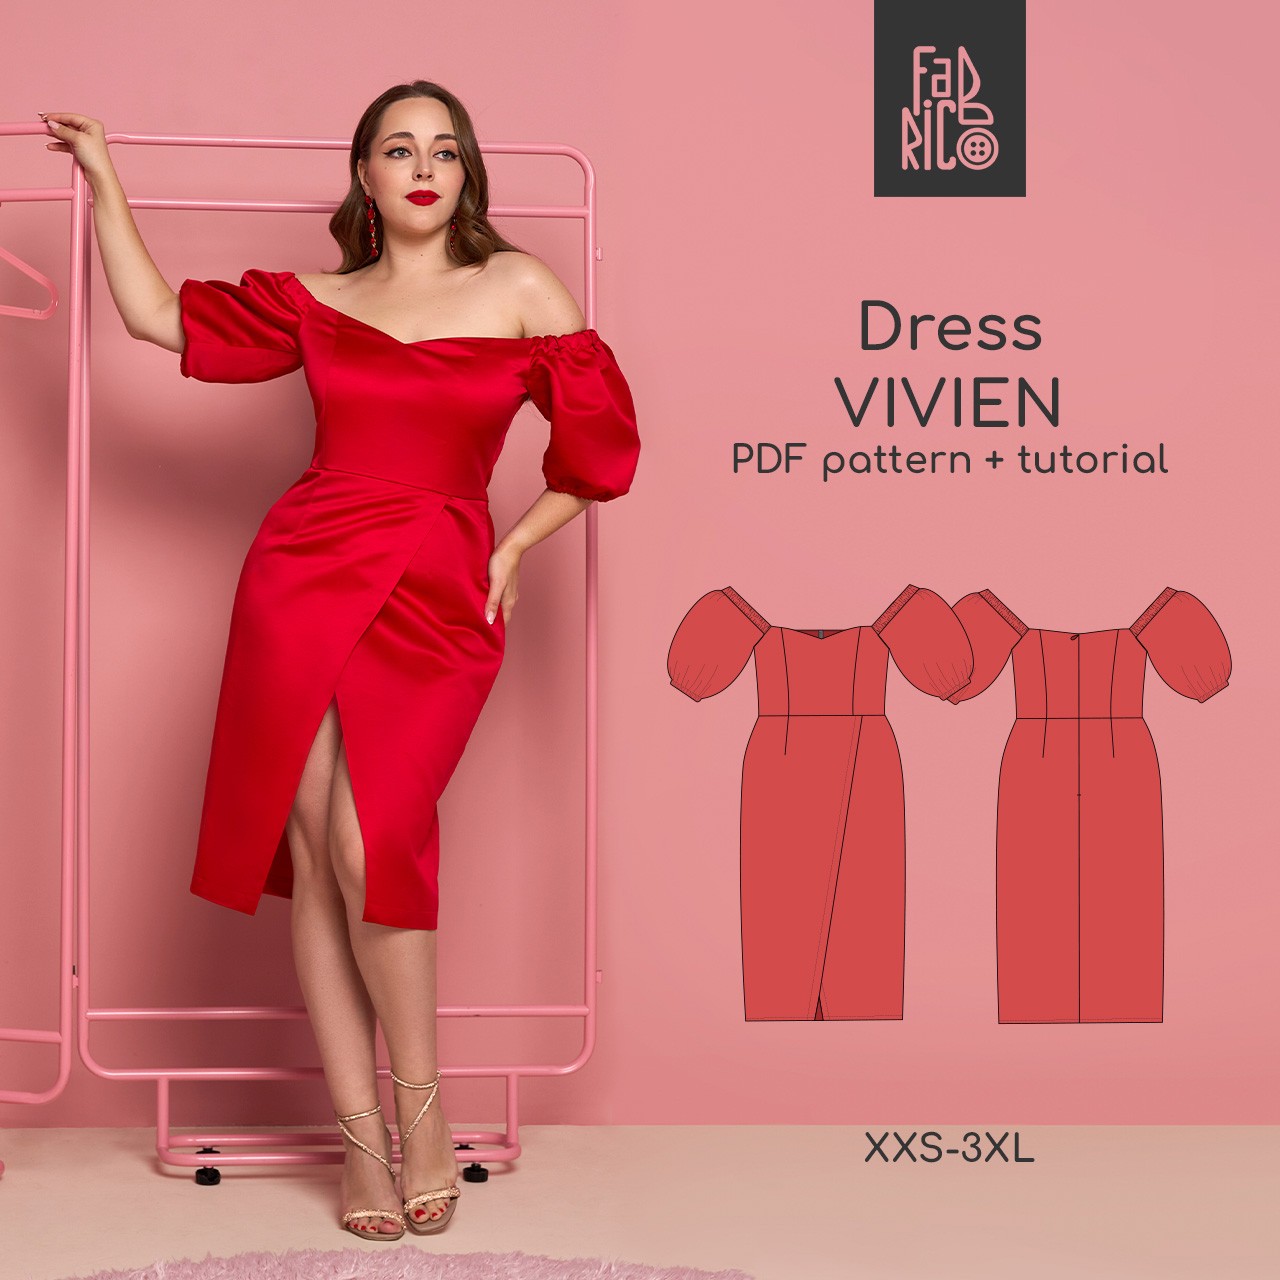 35+ Free Dress Patterns For Women